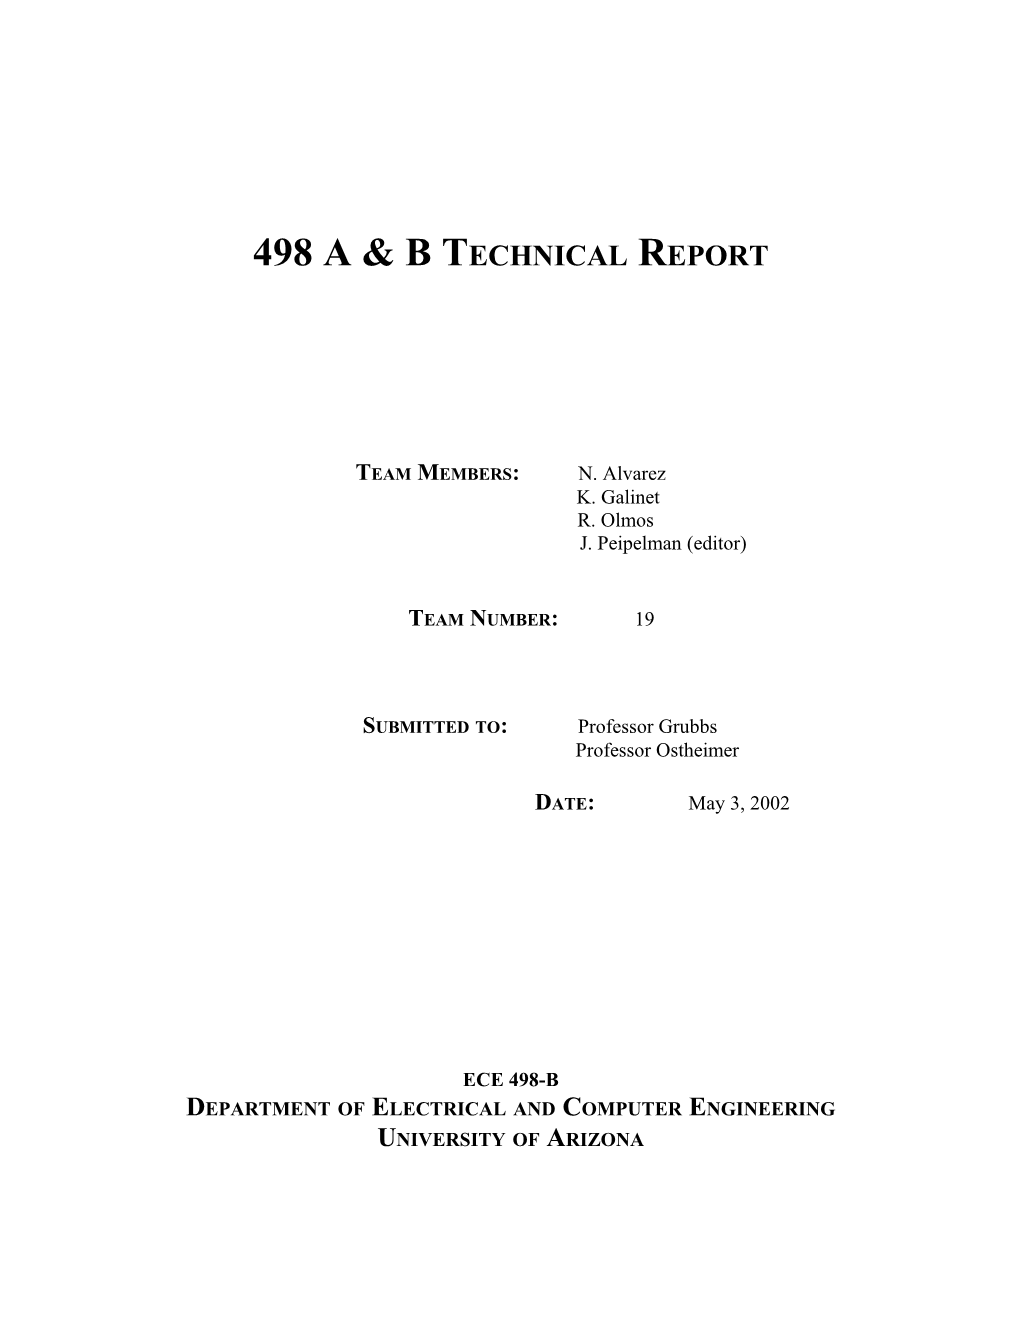 498 a & B Technical Report